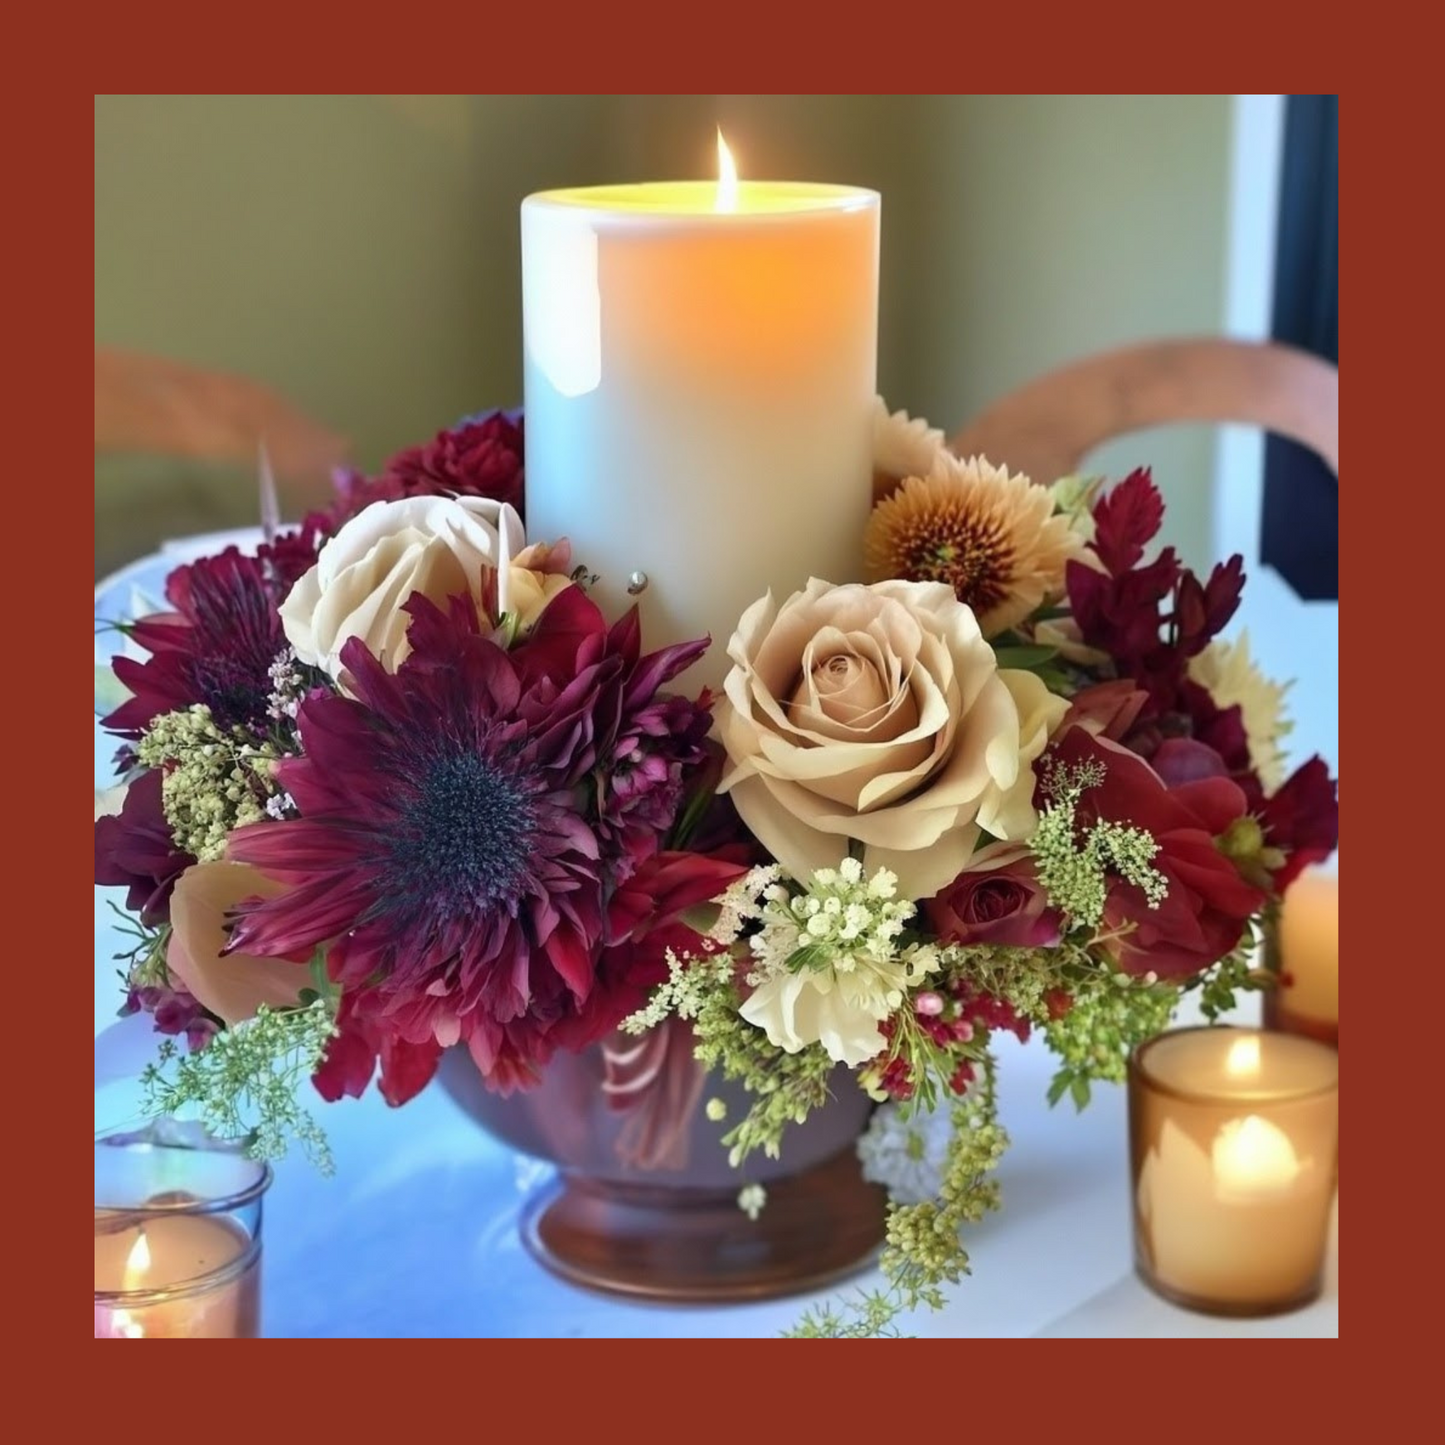 Thanksgiving Centerpiece "Save Room for Sides" Flower Arrangement